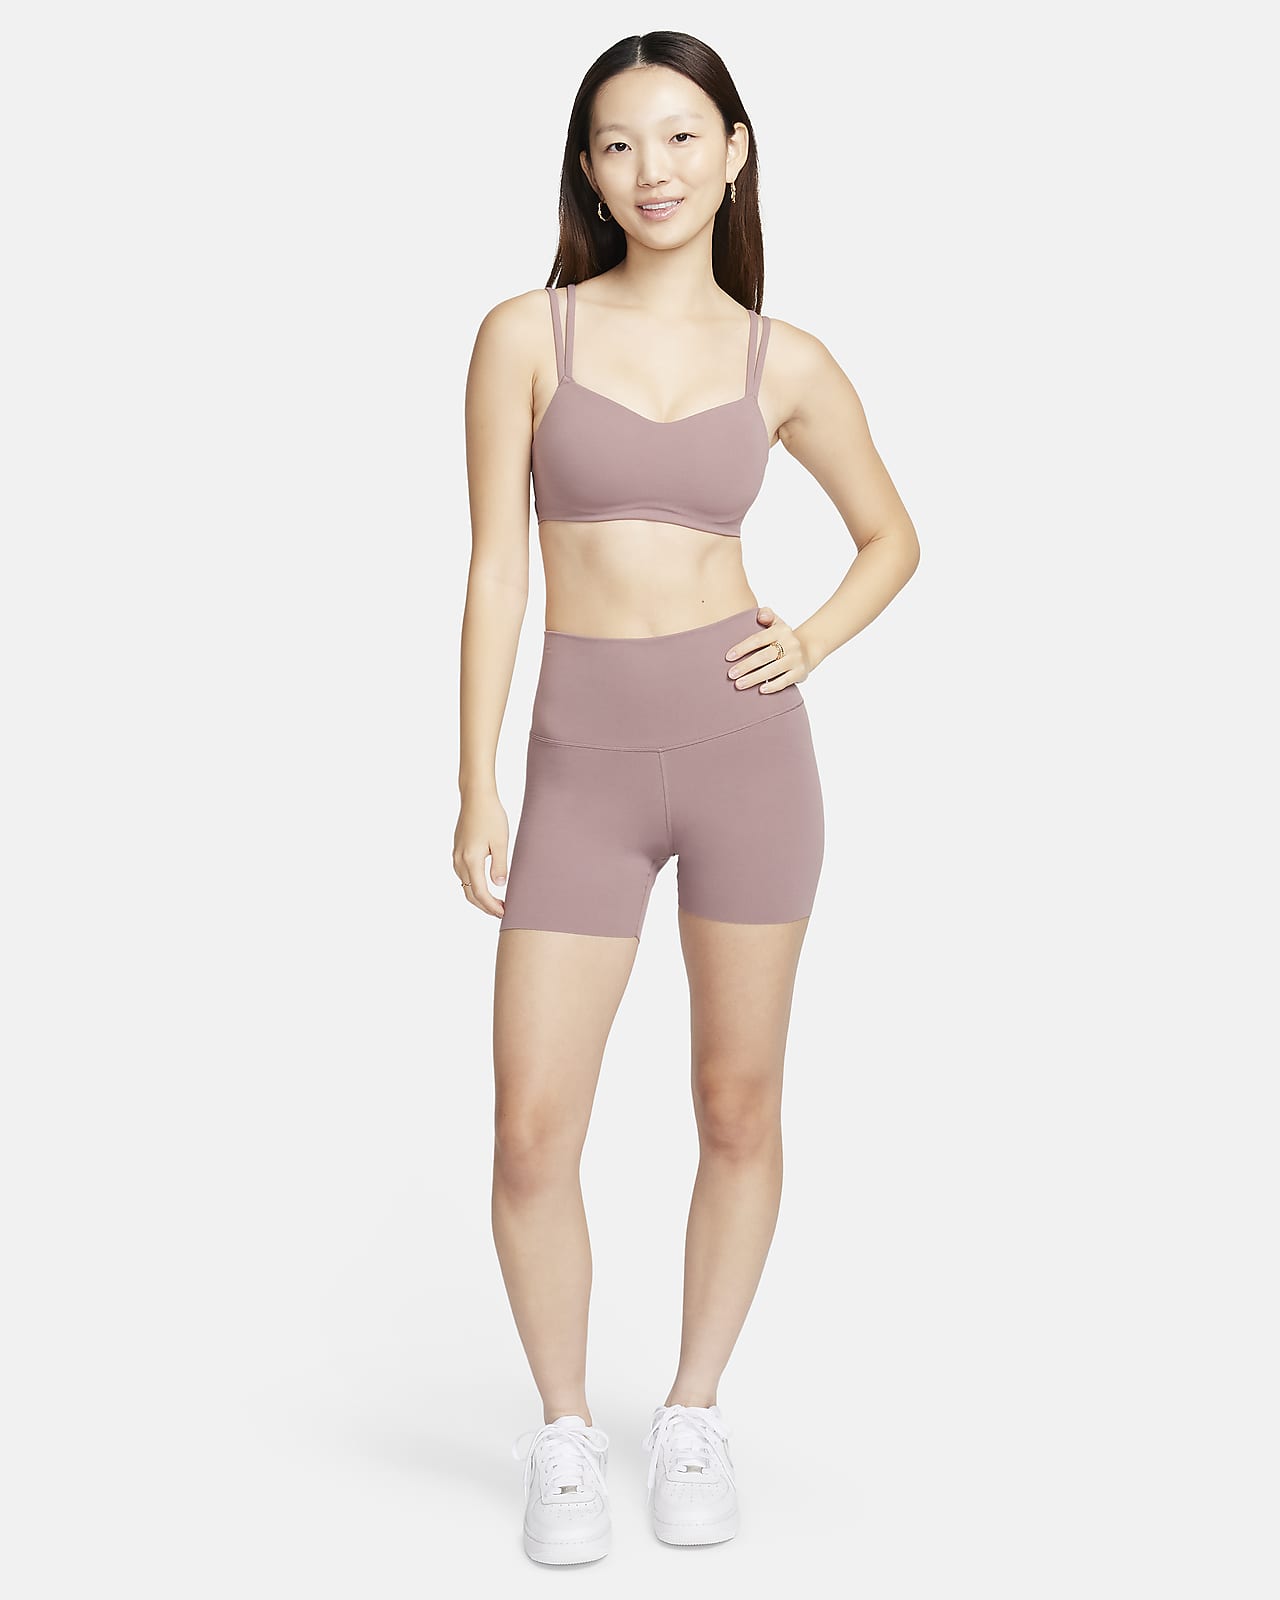 Nike Zenvy Strappy Women's Light-Support Padded Sports Bra (Plus Size)